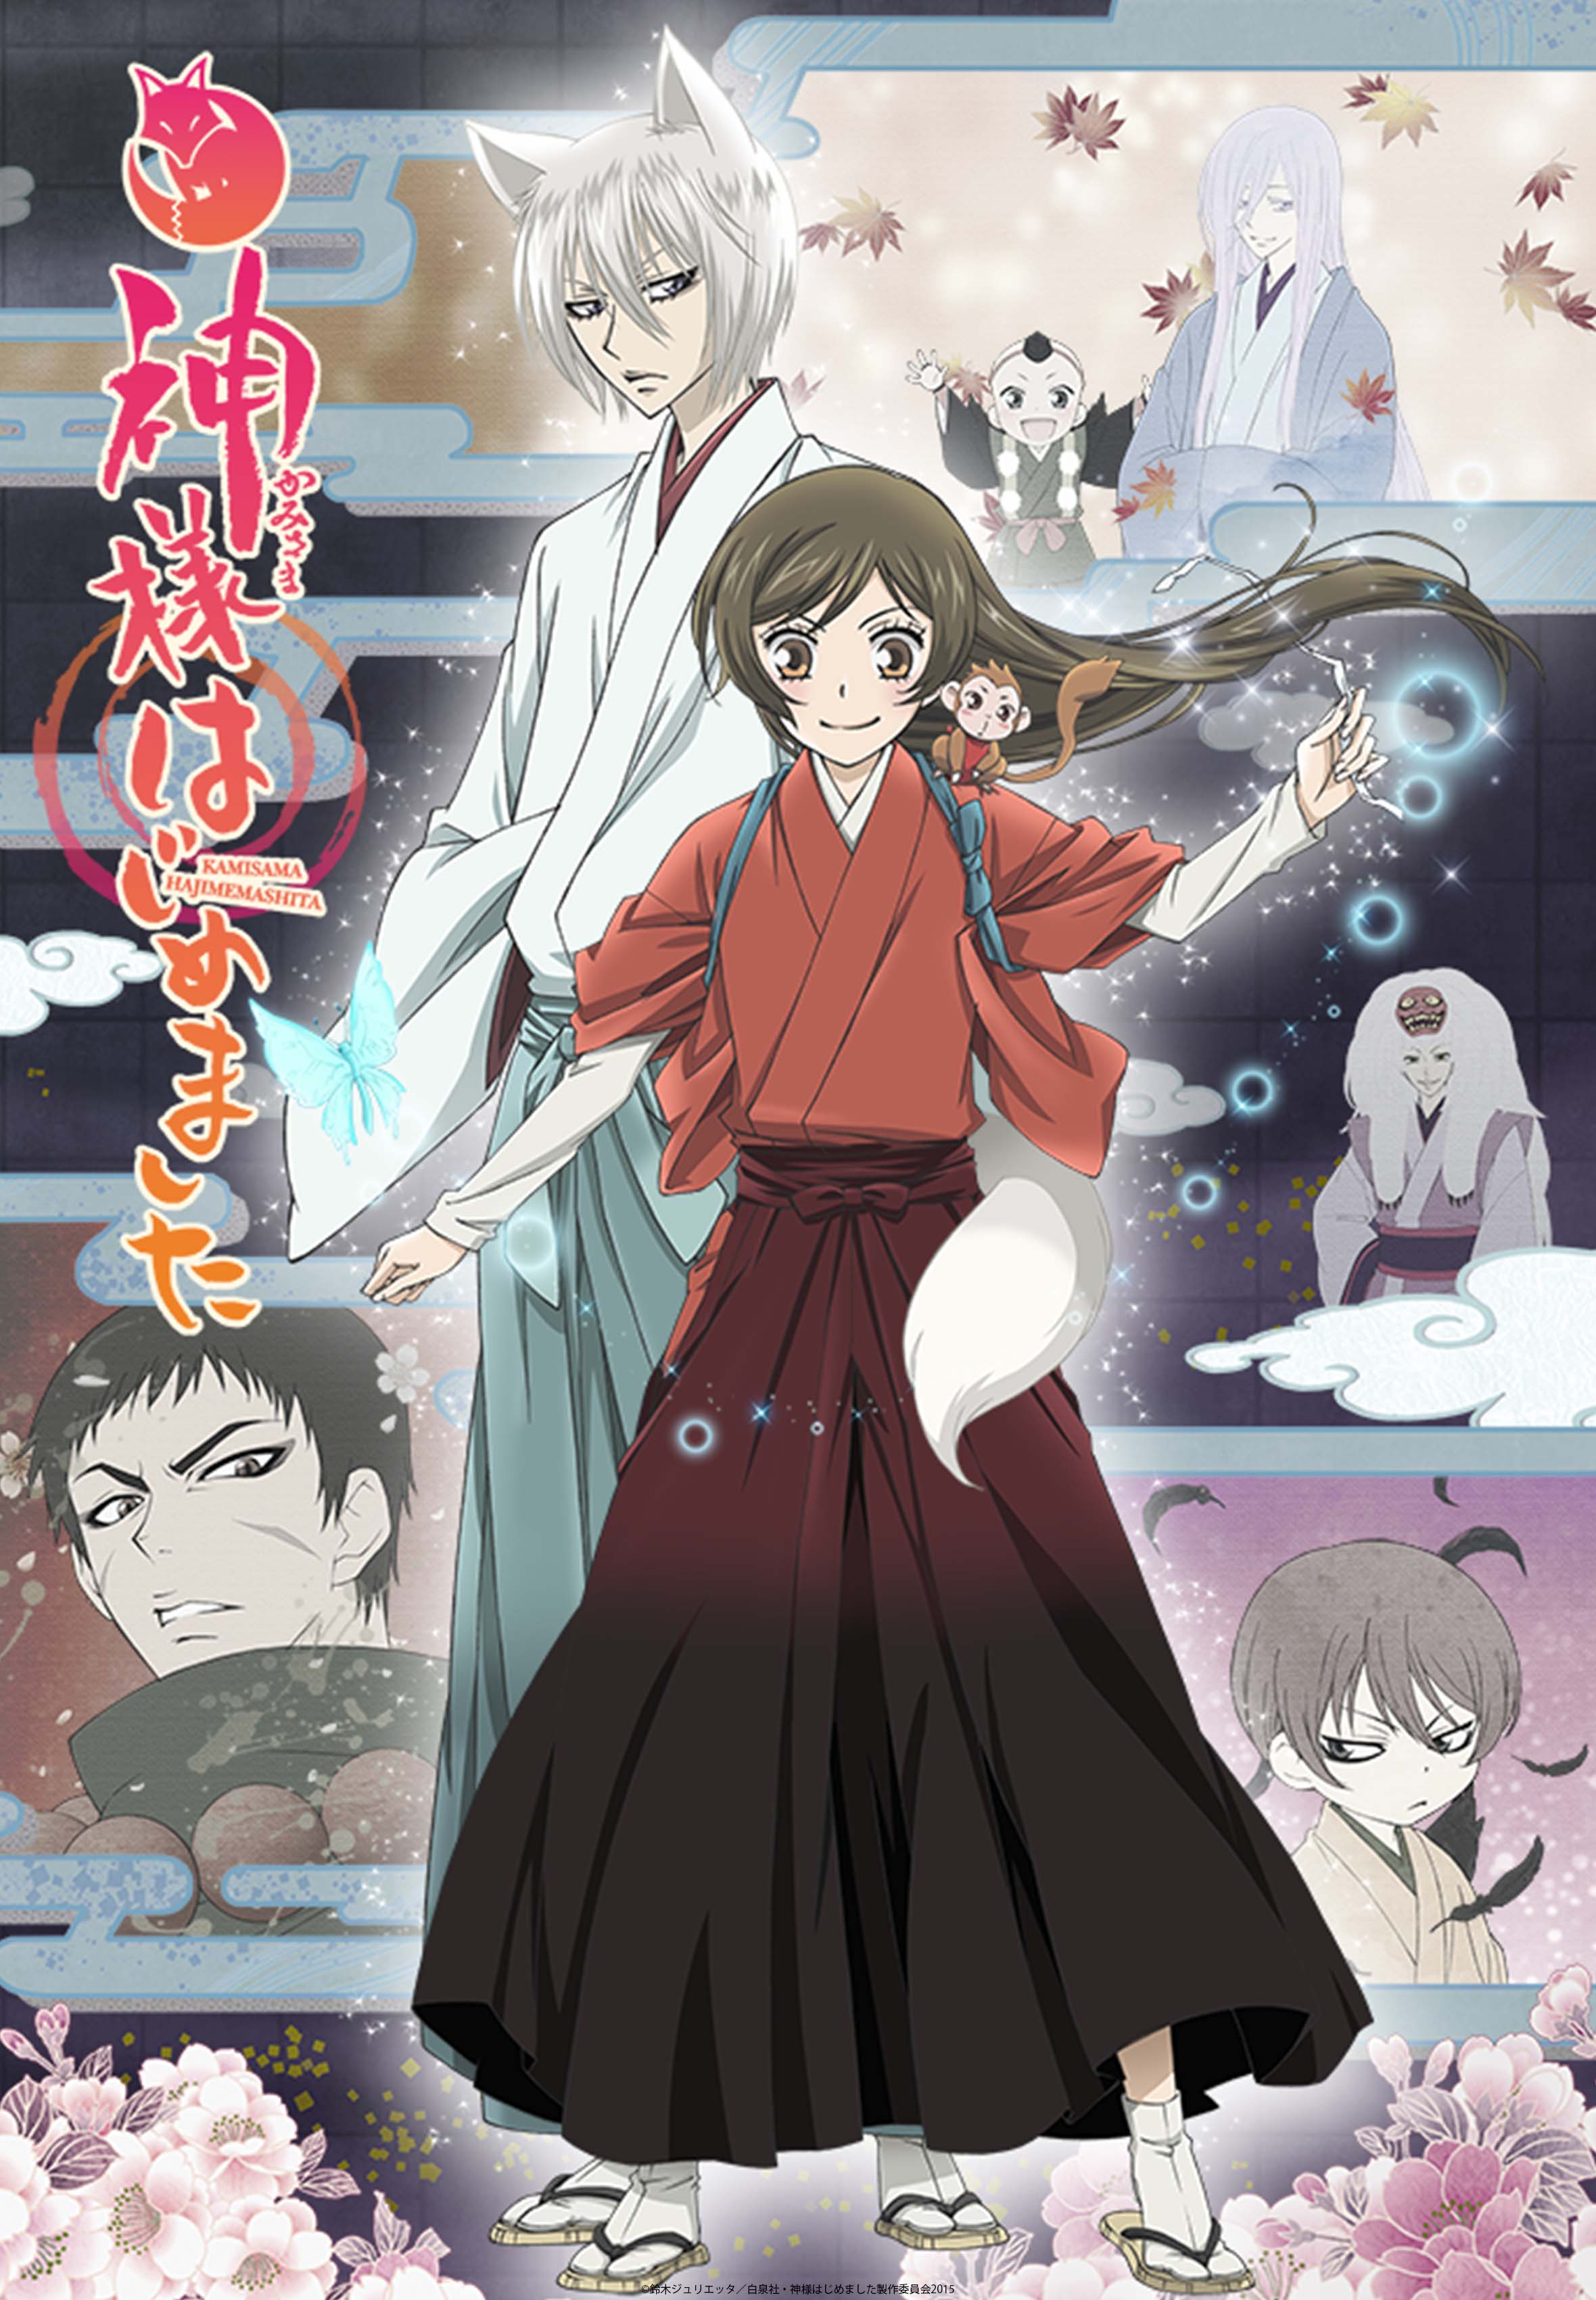 Kamisama Hajimemashita◎ - 11 - Lost in Anime